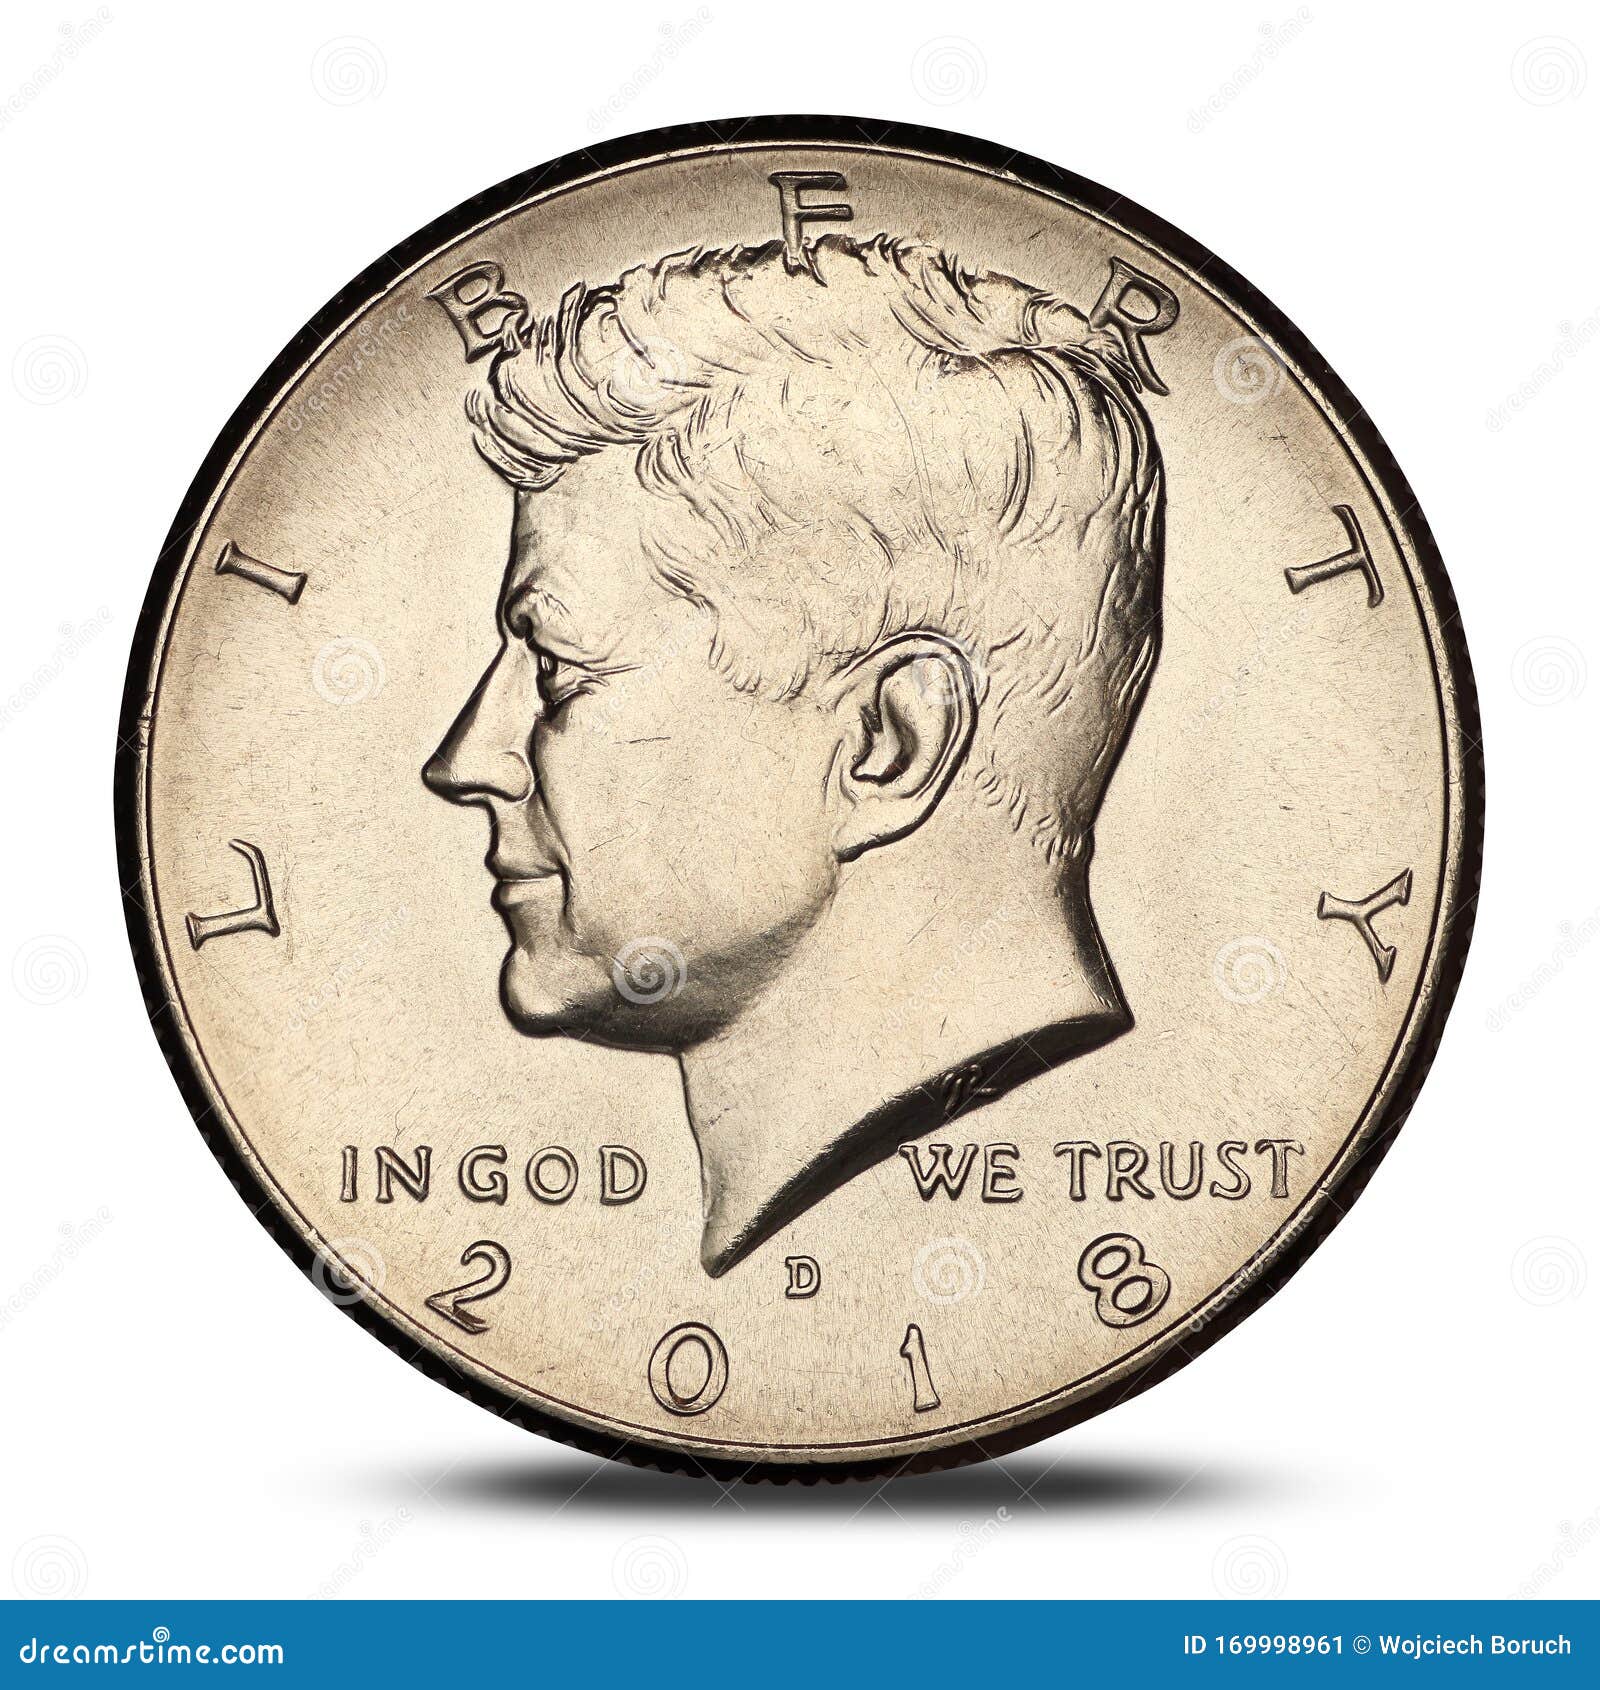 SILVERY BLUE BUTTERFLY JFK Kennedy Half Dollar US Colorized Coin 